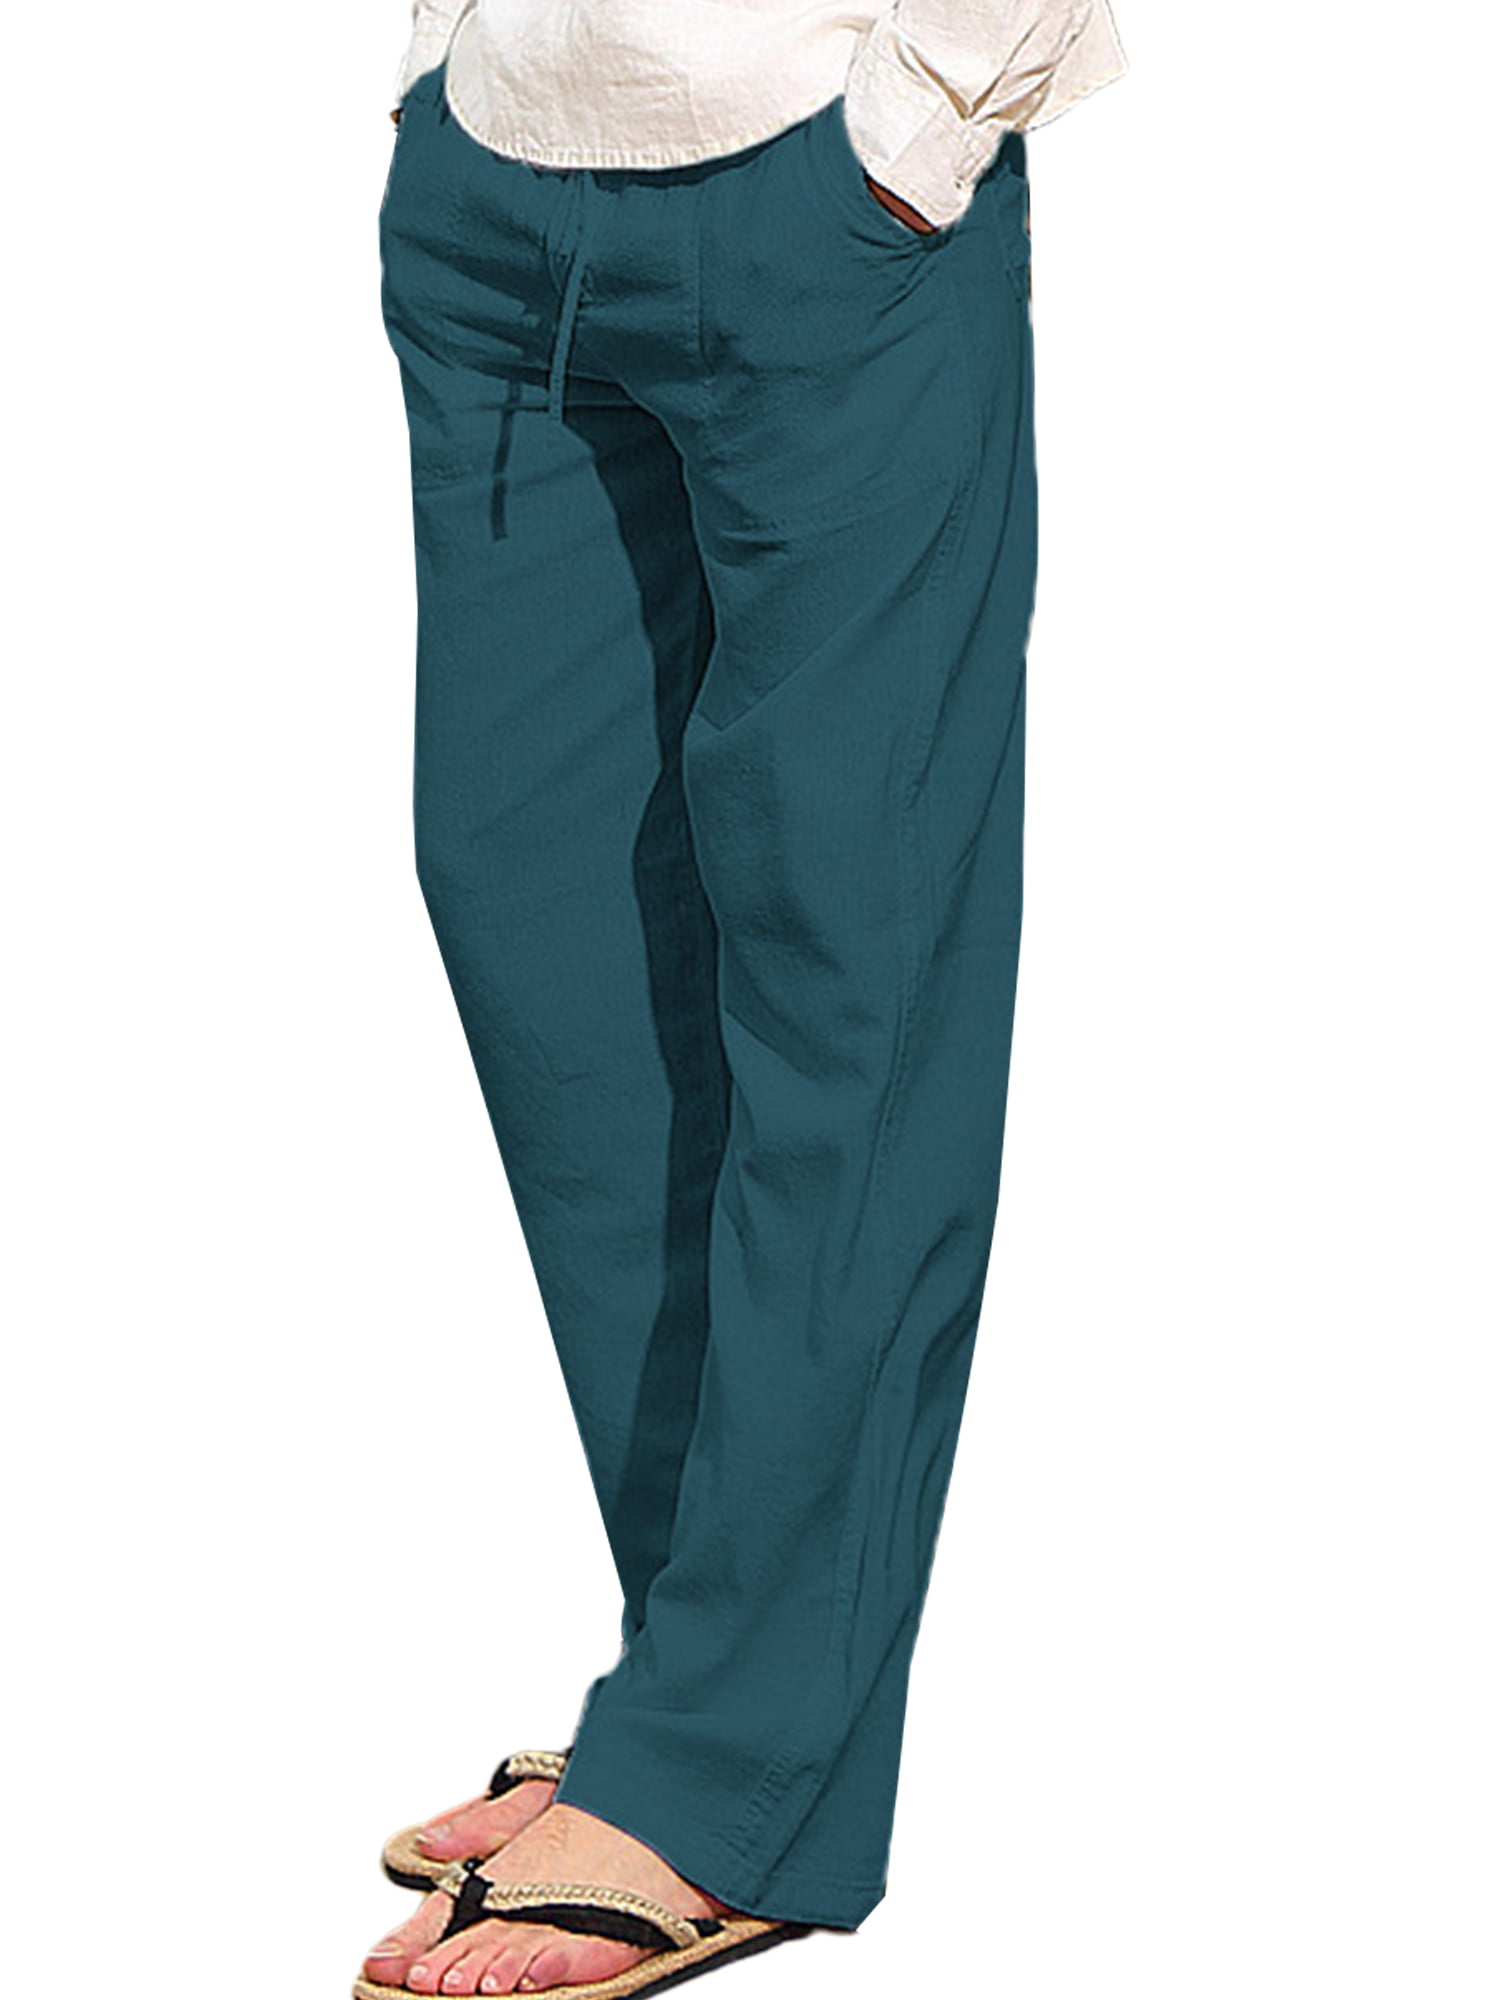 Men's Cotton Linen Pants Loose Casual Lightweight Elastic Waist Drawstring Yoga Beach Jogger Trousers S-5XL 